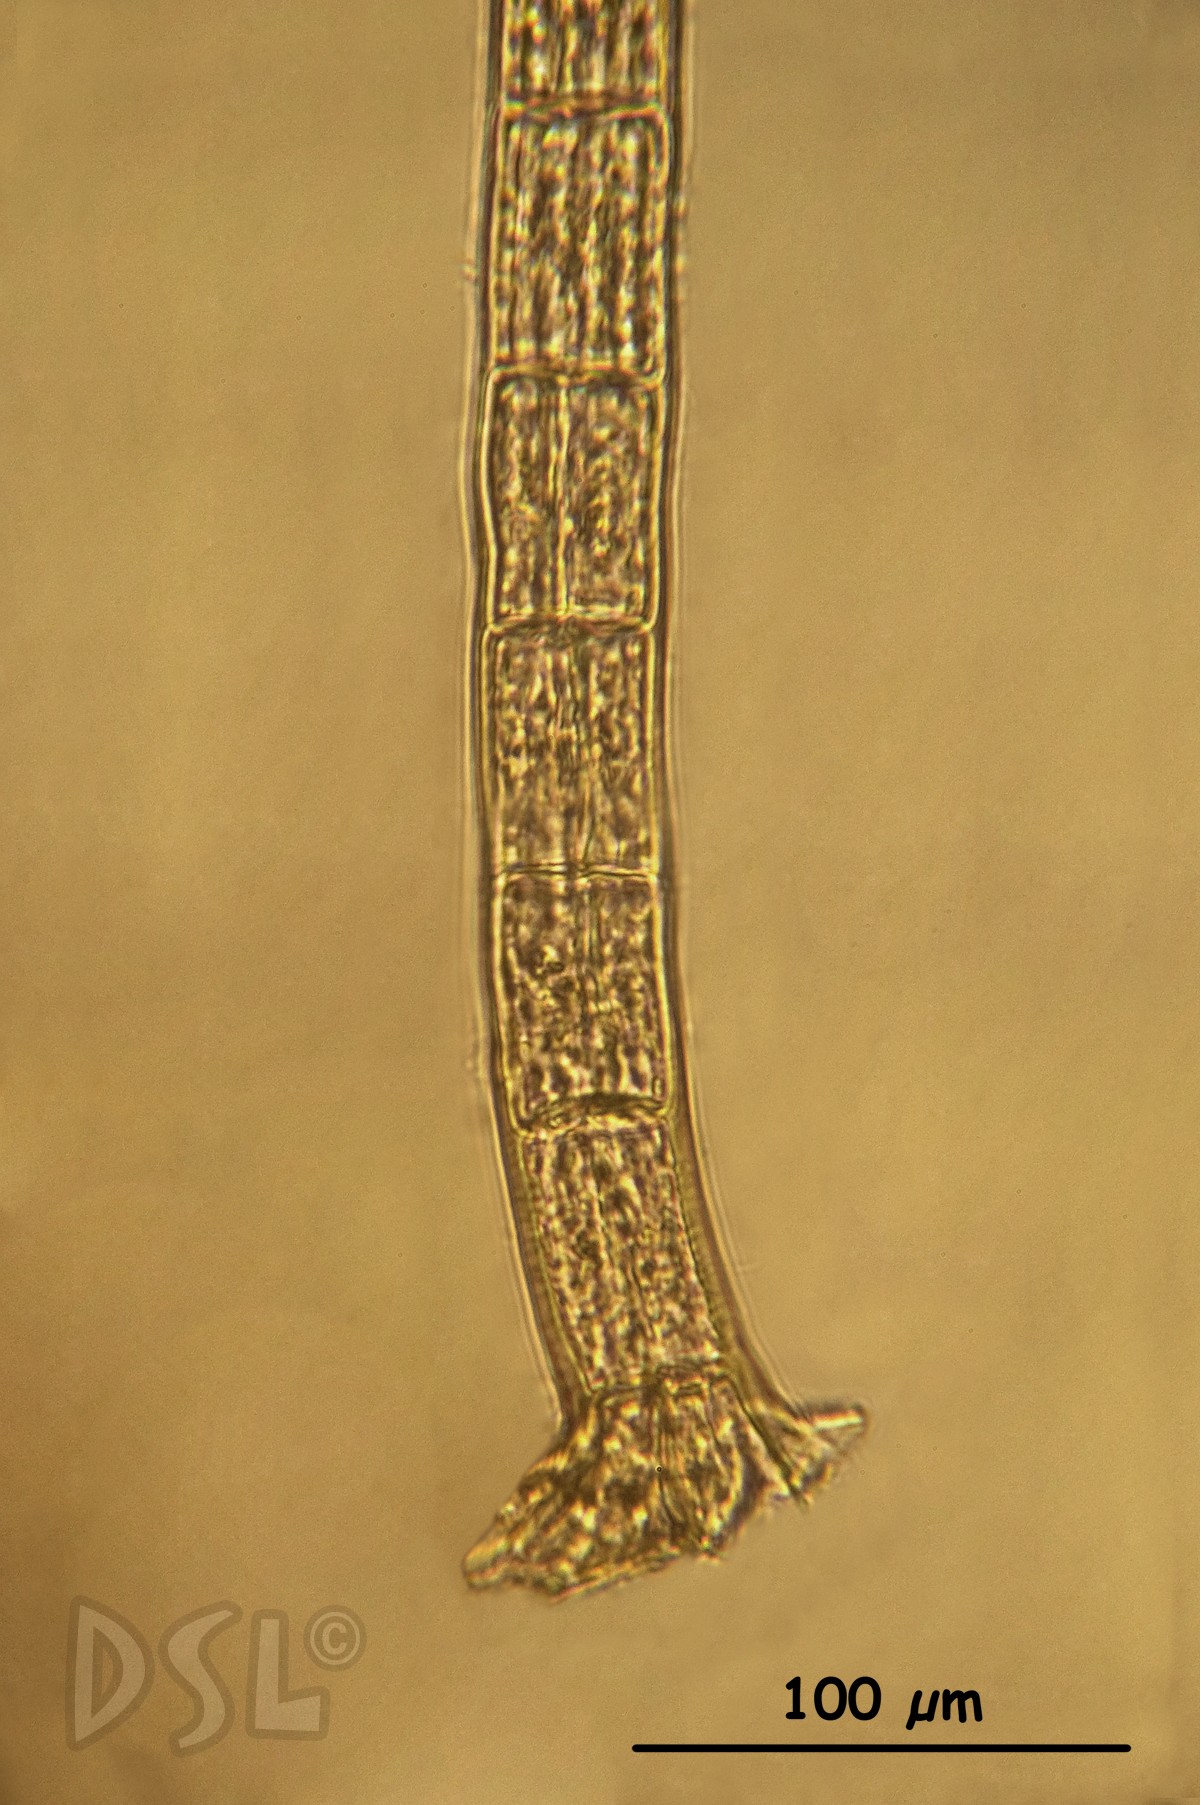 Sphacelaria image